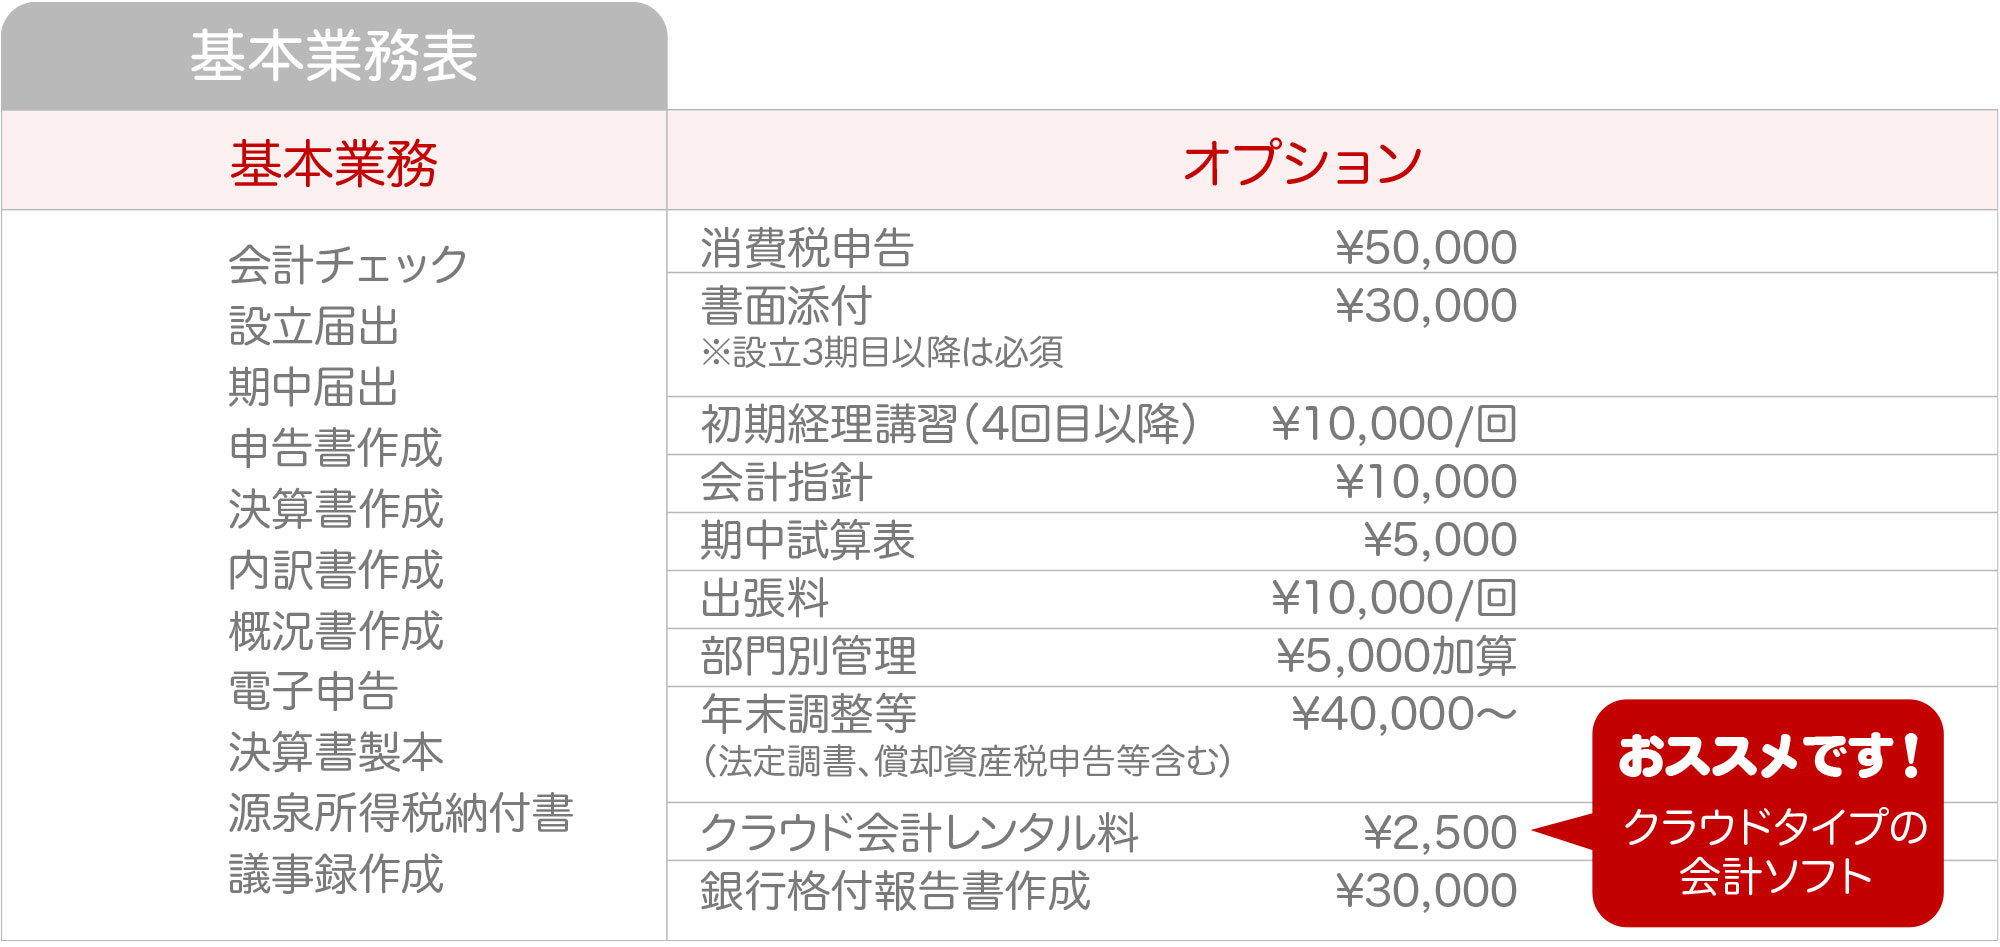 浅野会計事務所の金額・料金案内Hプラン基本業務表